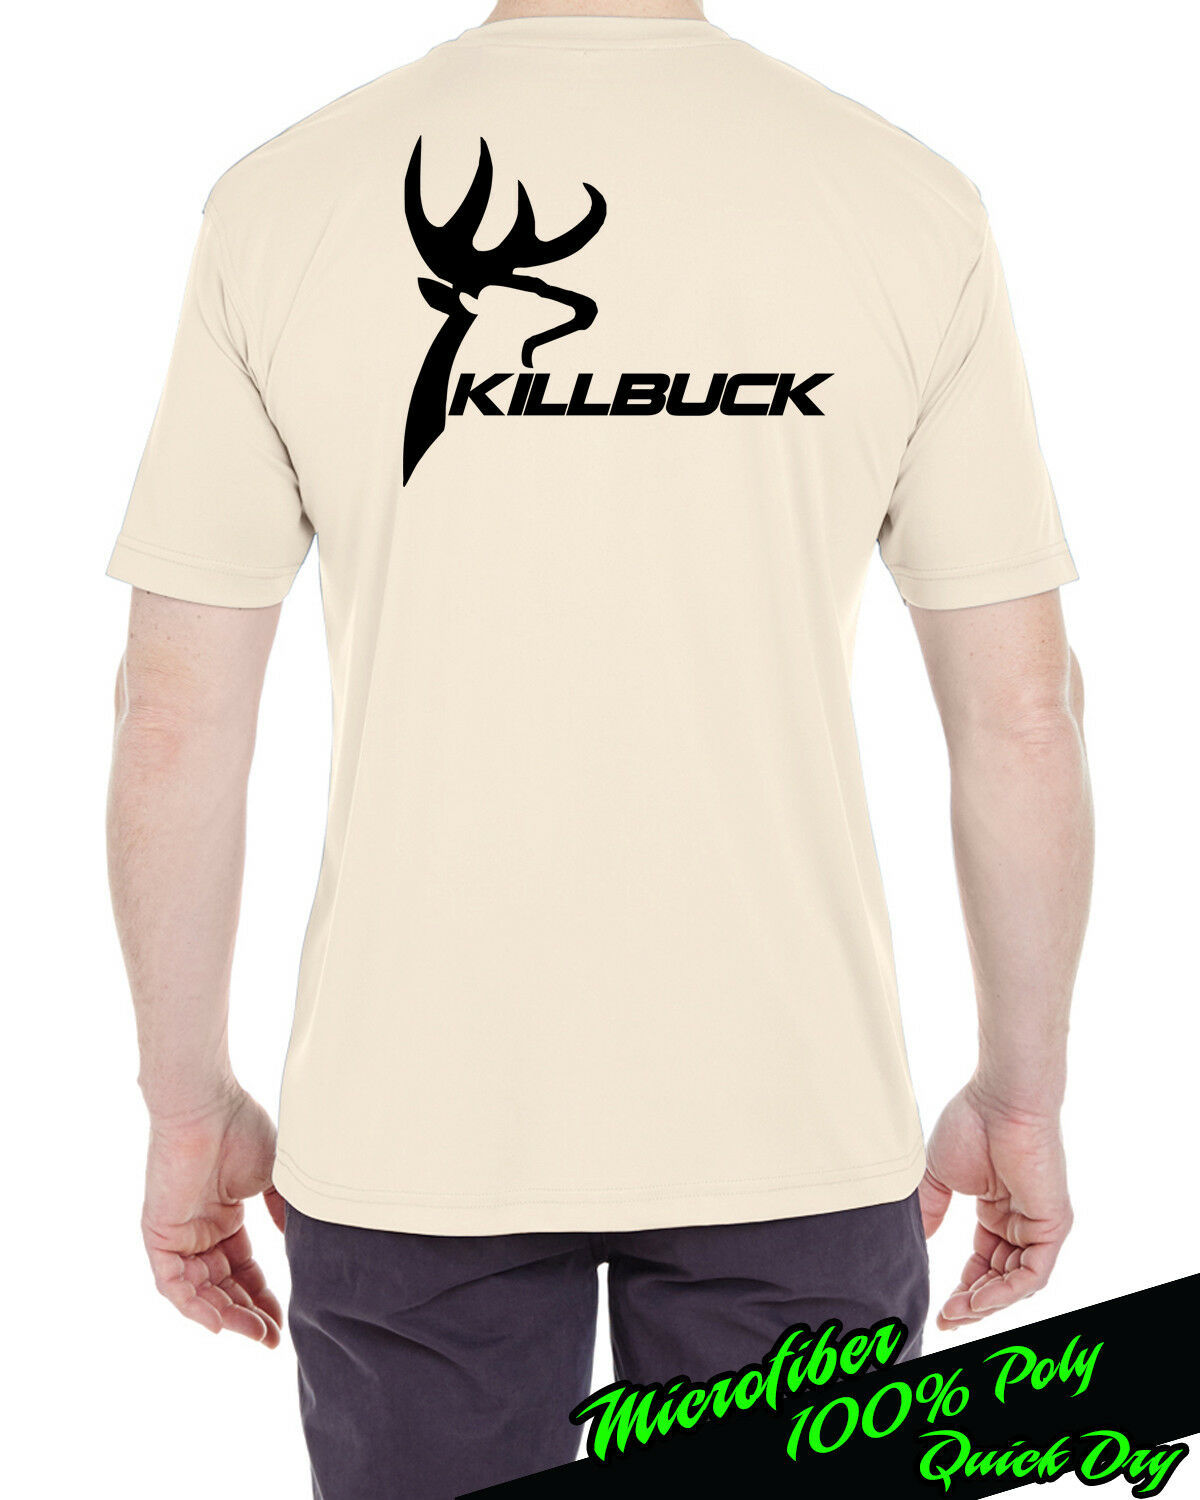 Killbuck Bowhunting bowhunter Microfiber Performance T-shirt buck Buck deer